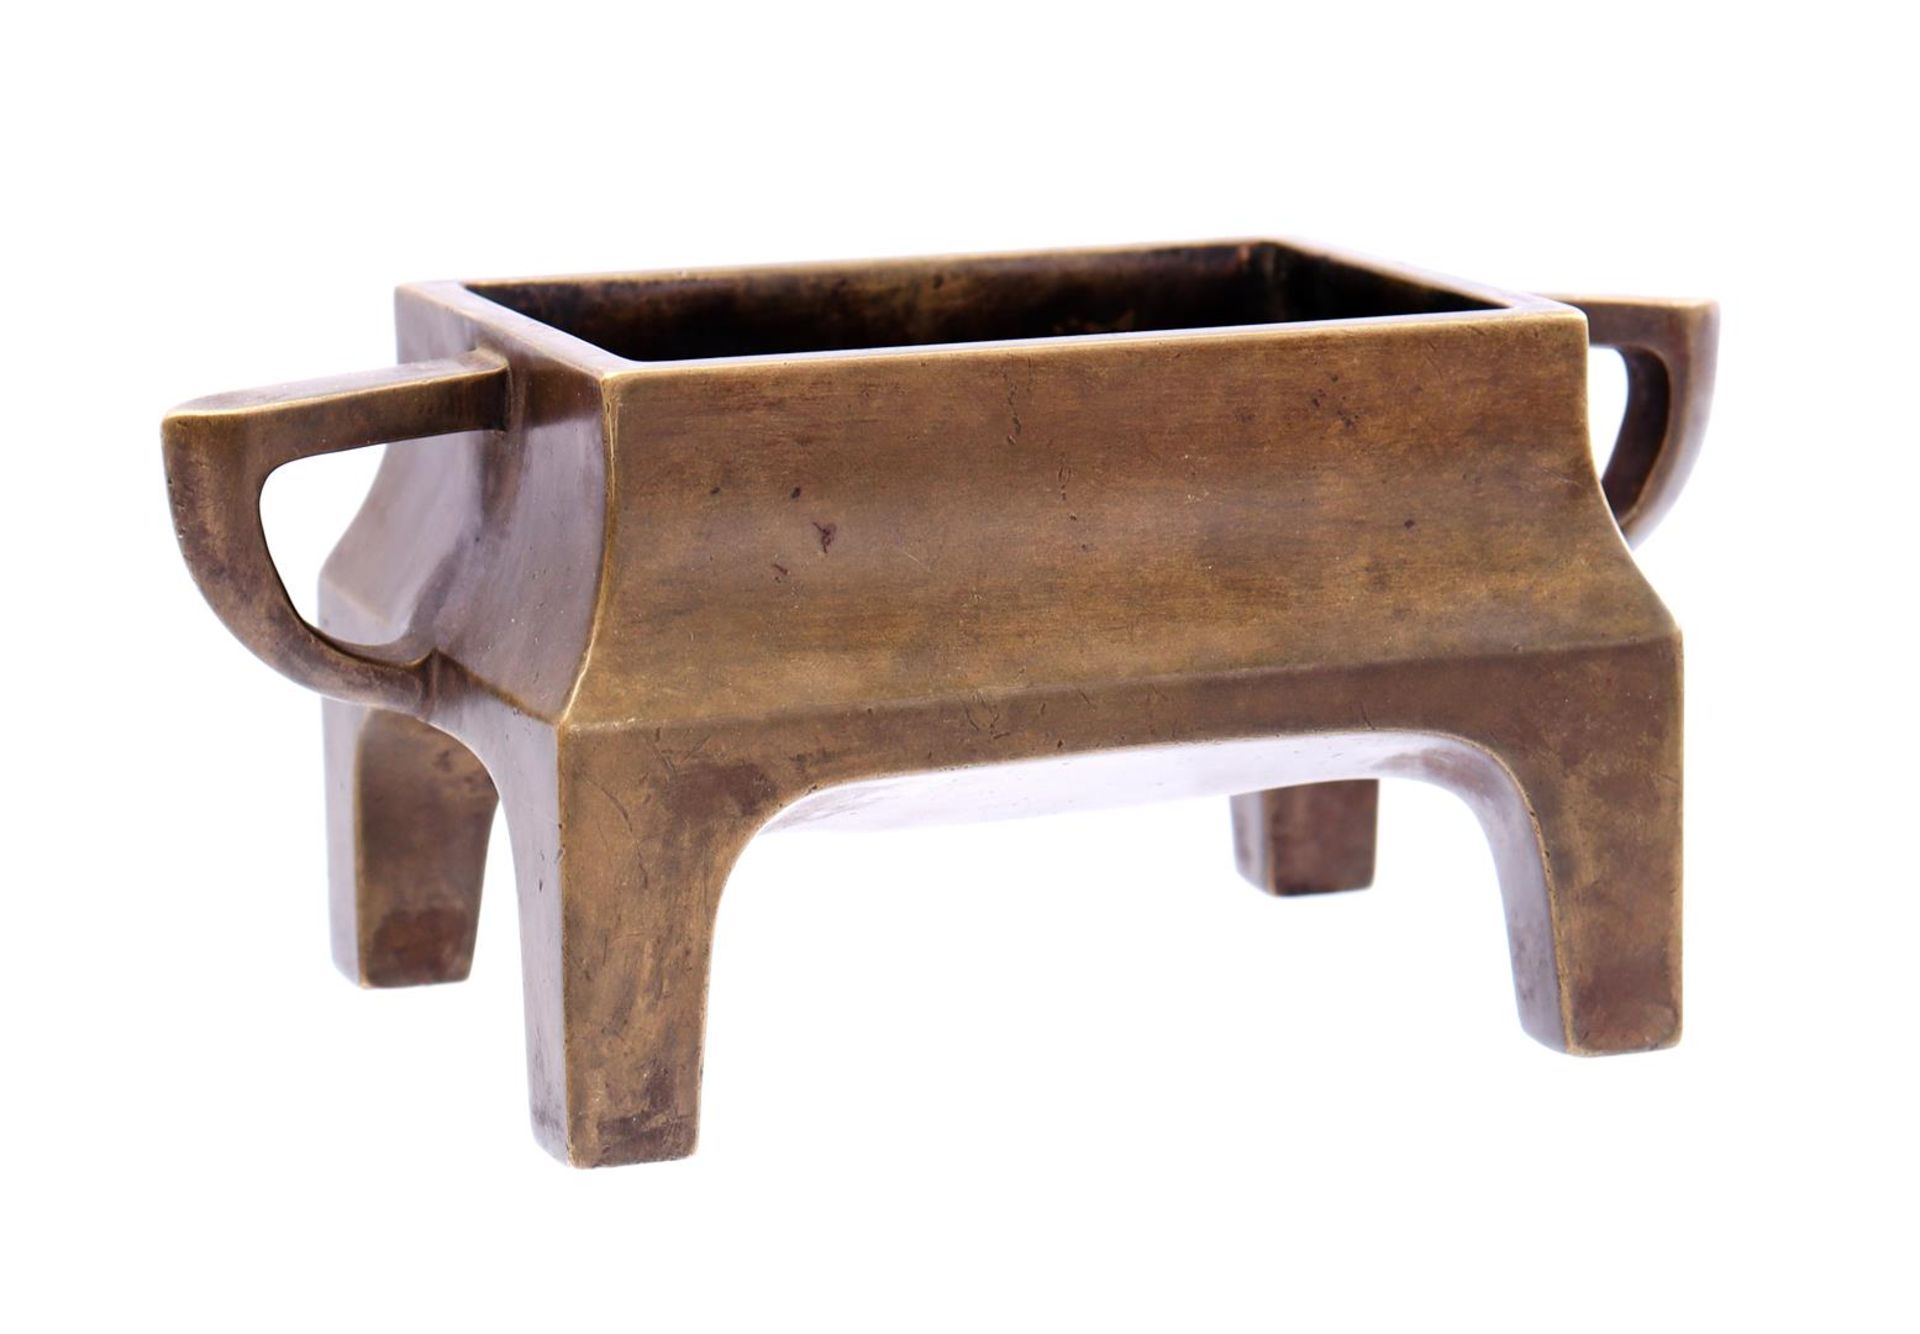 Bronze rectangular incense burner with 2 ears